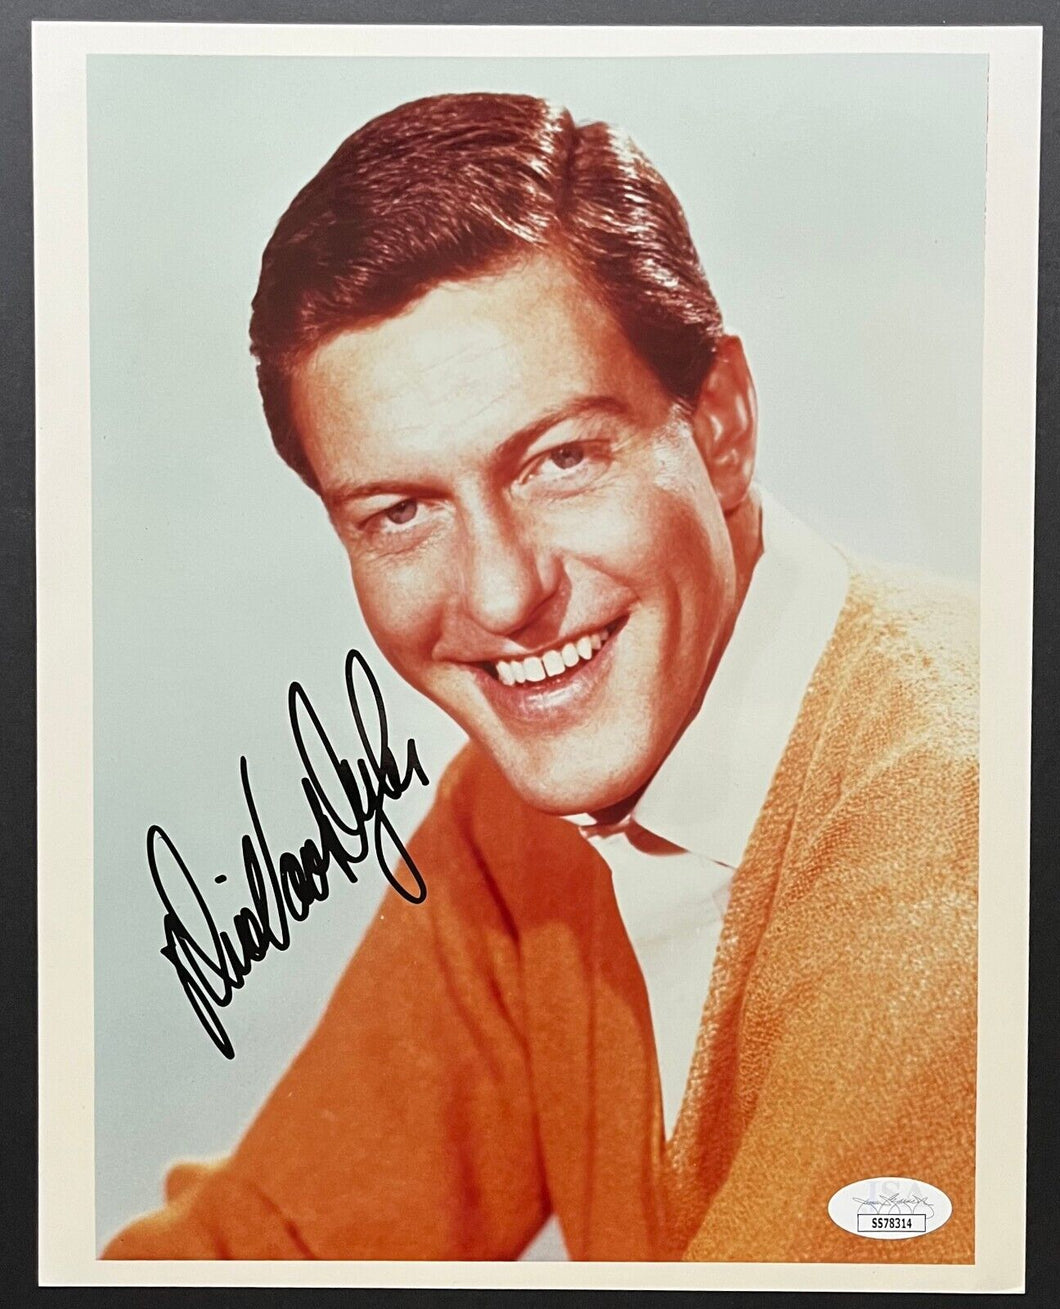 Dick Van Dyke Signed Photo Autographed Radio TV Star Actor Celebrity JSA COA